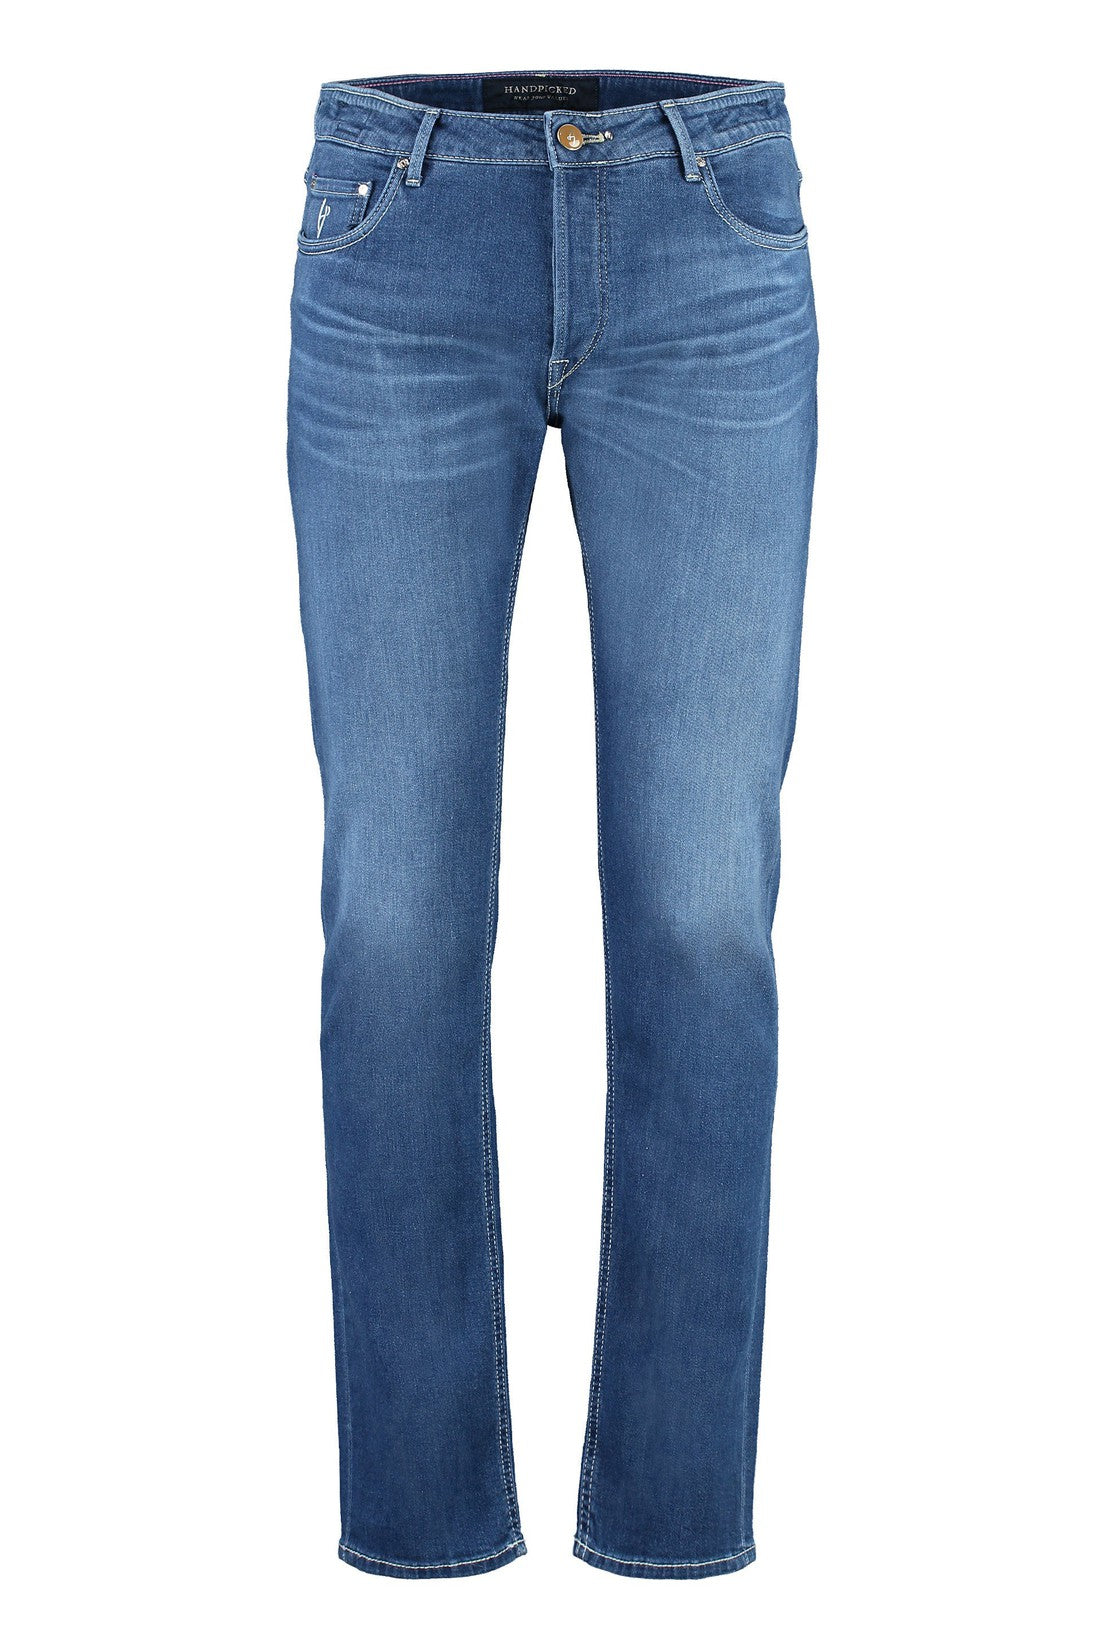 HANDPICKED-OUTLET-SALE-5-pocket straight-leg jeans-ARCHIVIST